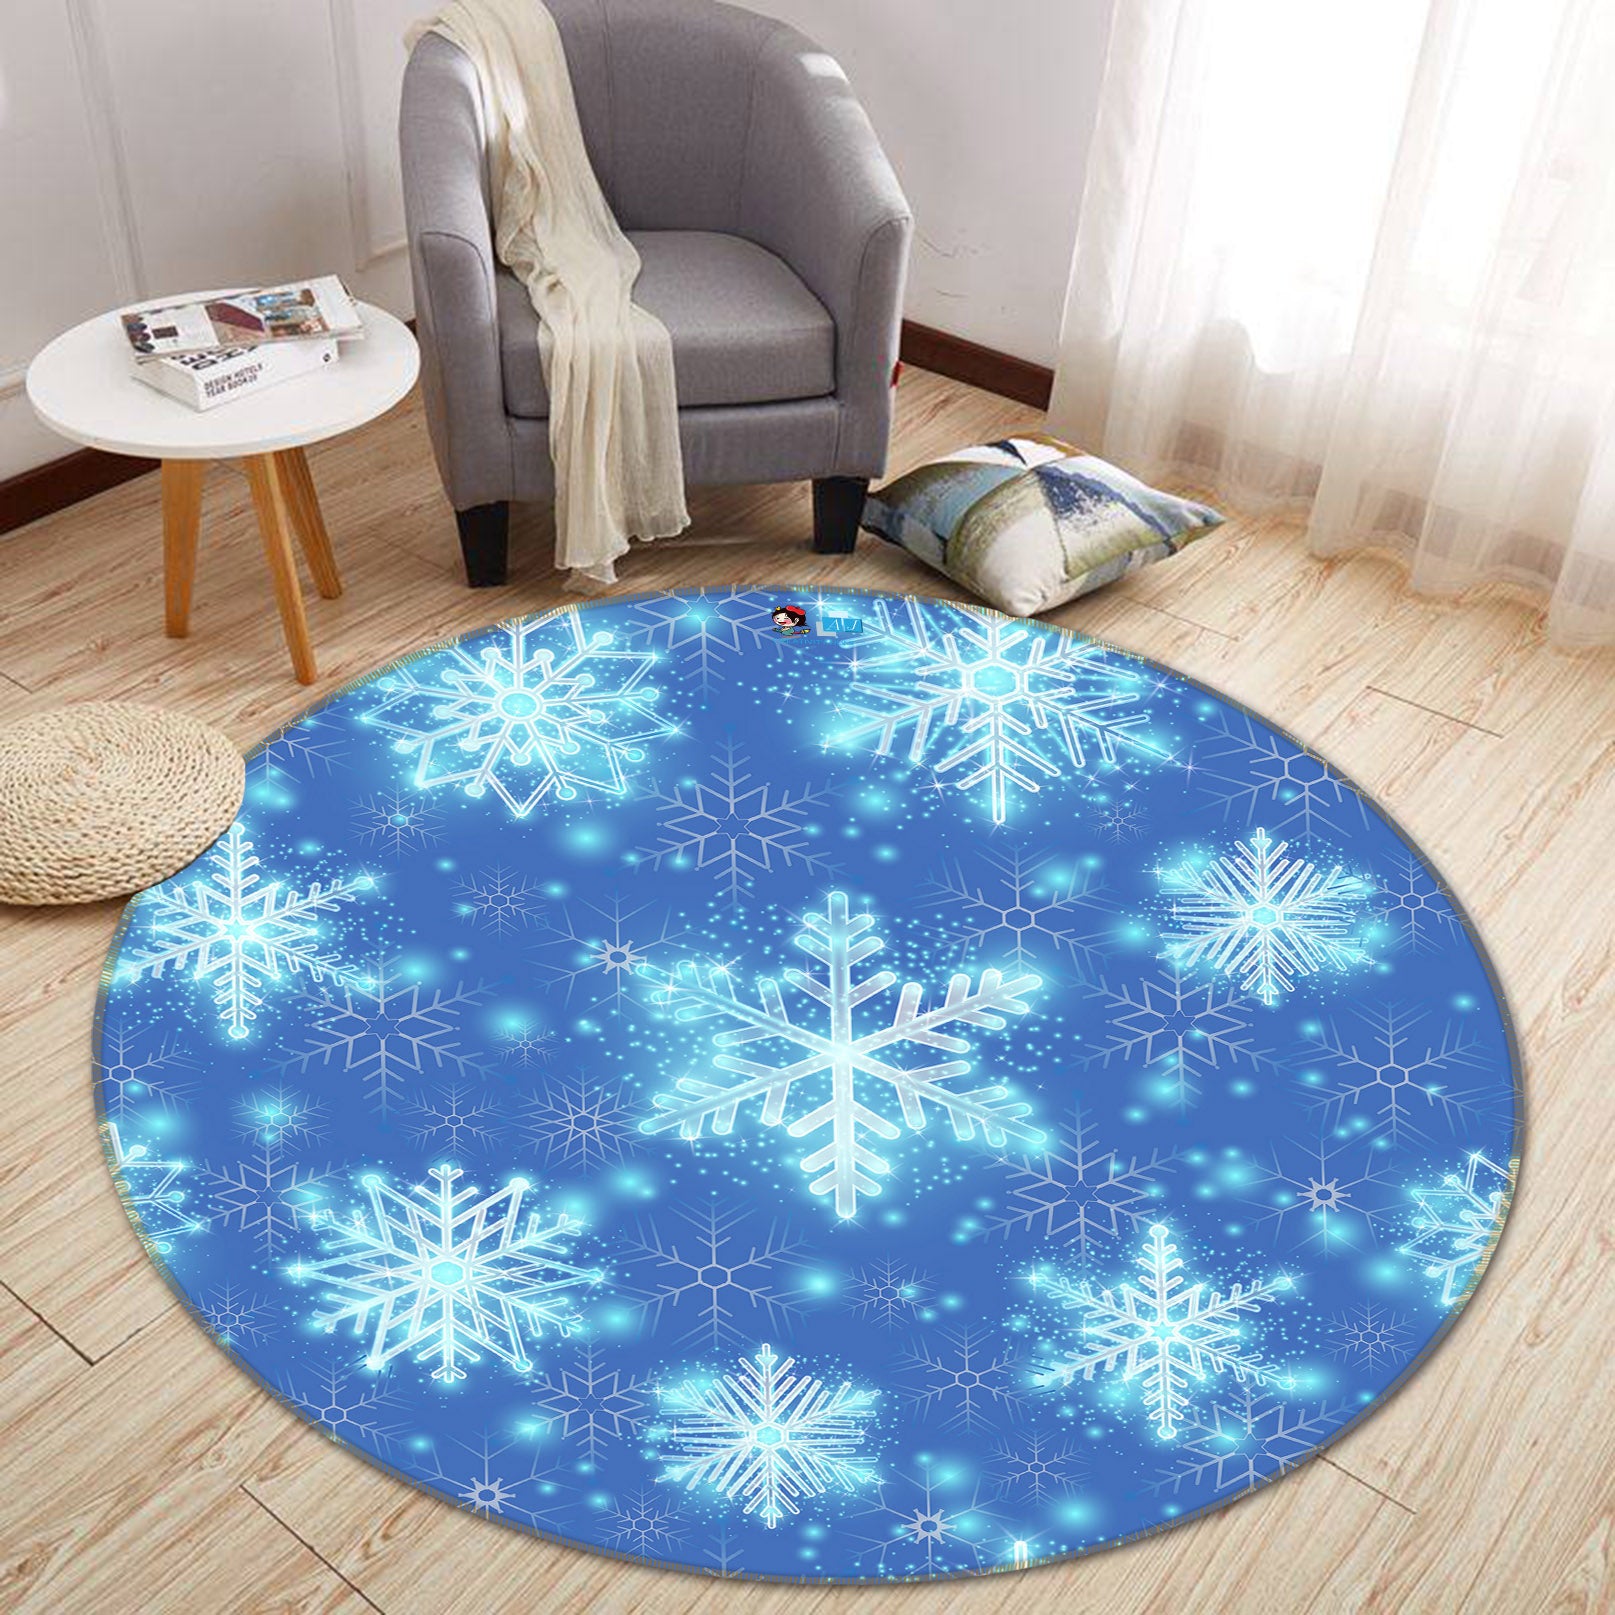 3D Blue Snowflakes 54111 Christmas Round Non Slip Rug Mat Xmas